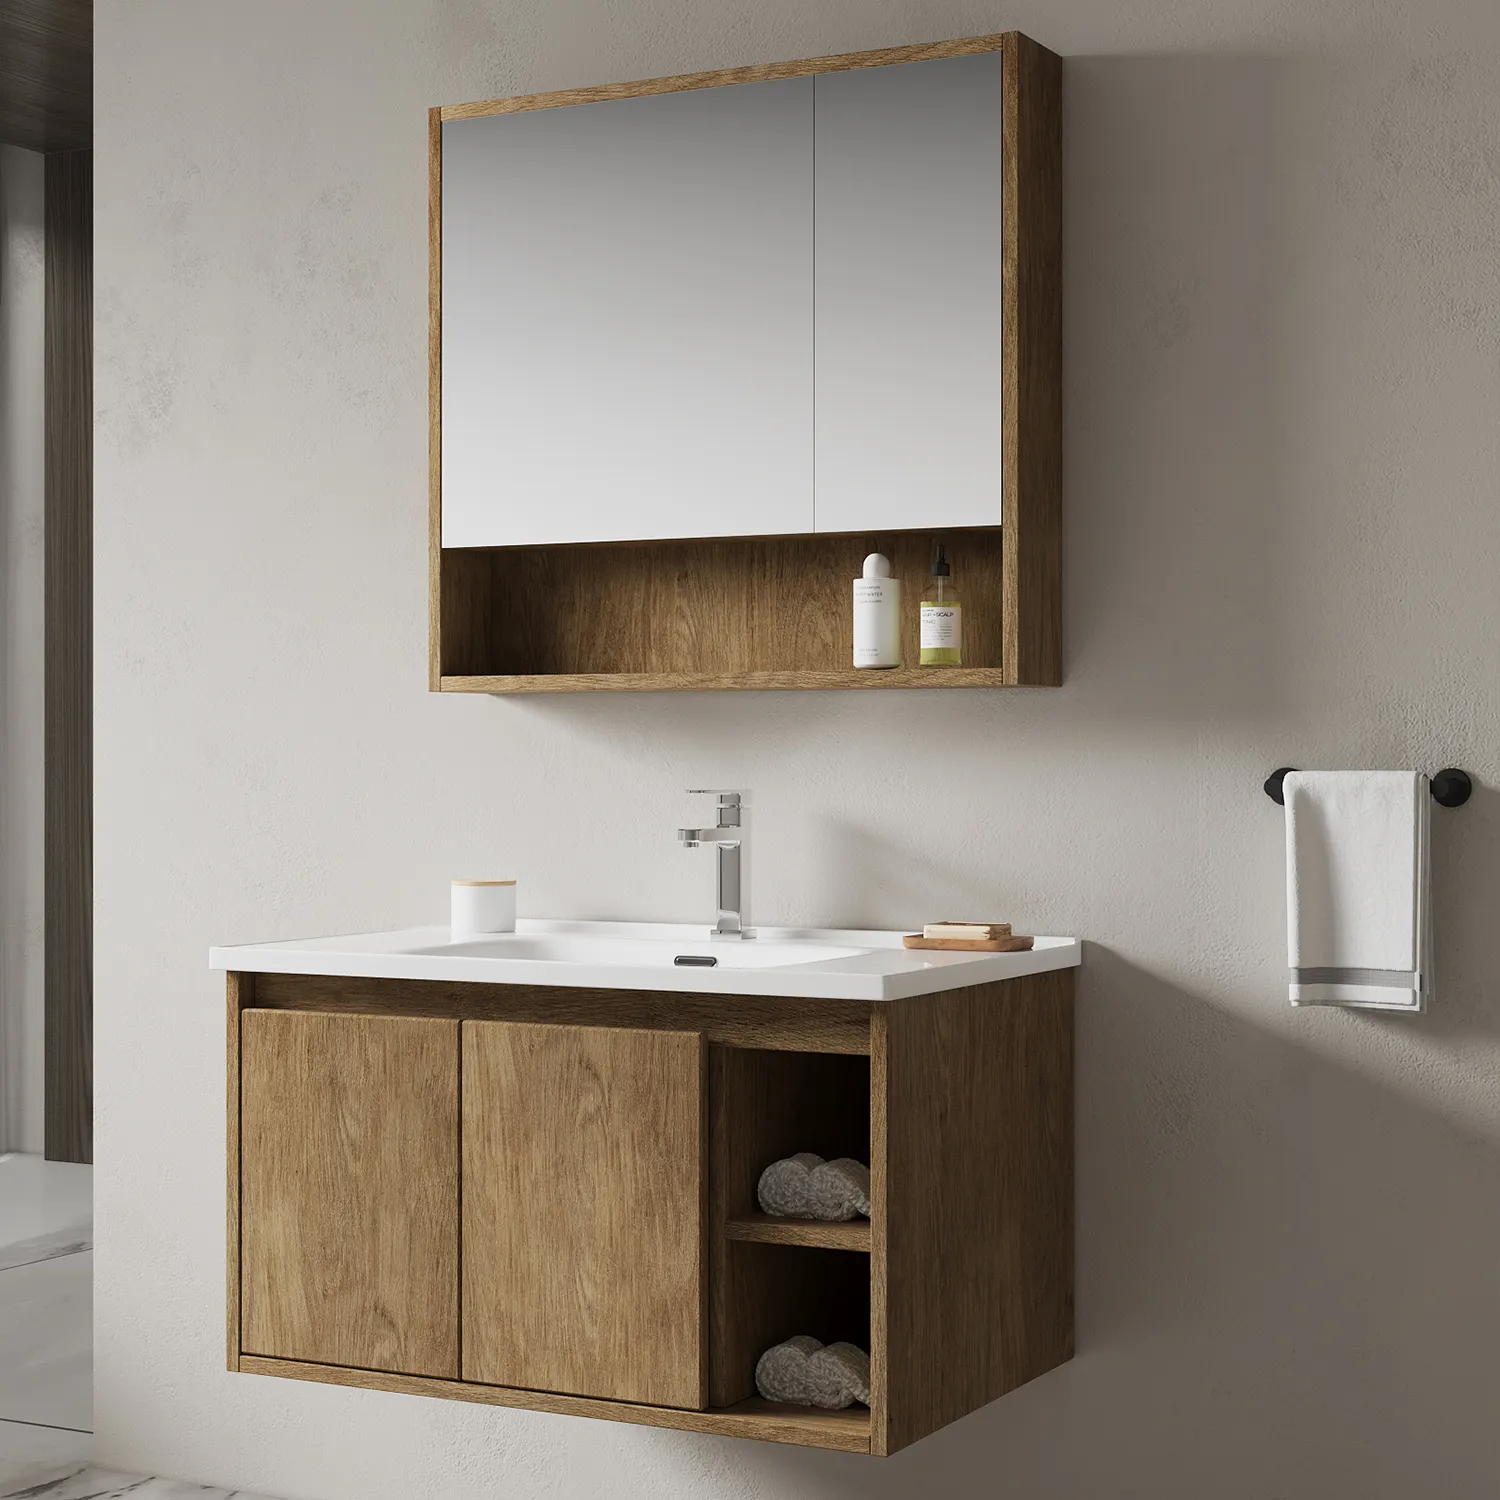 YIDA Wall Mounted Wood Grain Bathroom Vanities Combo  Bath Mirror Cabinet